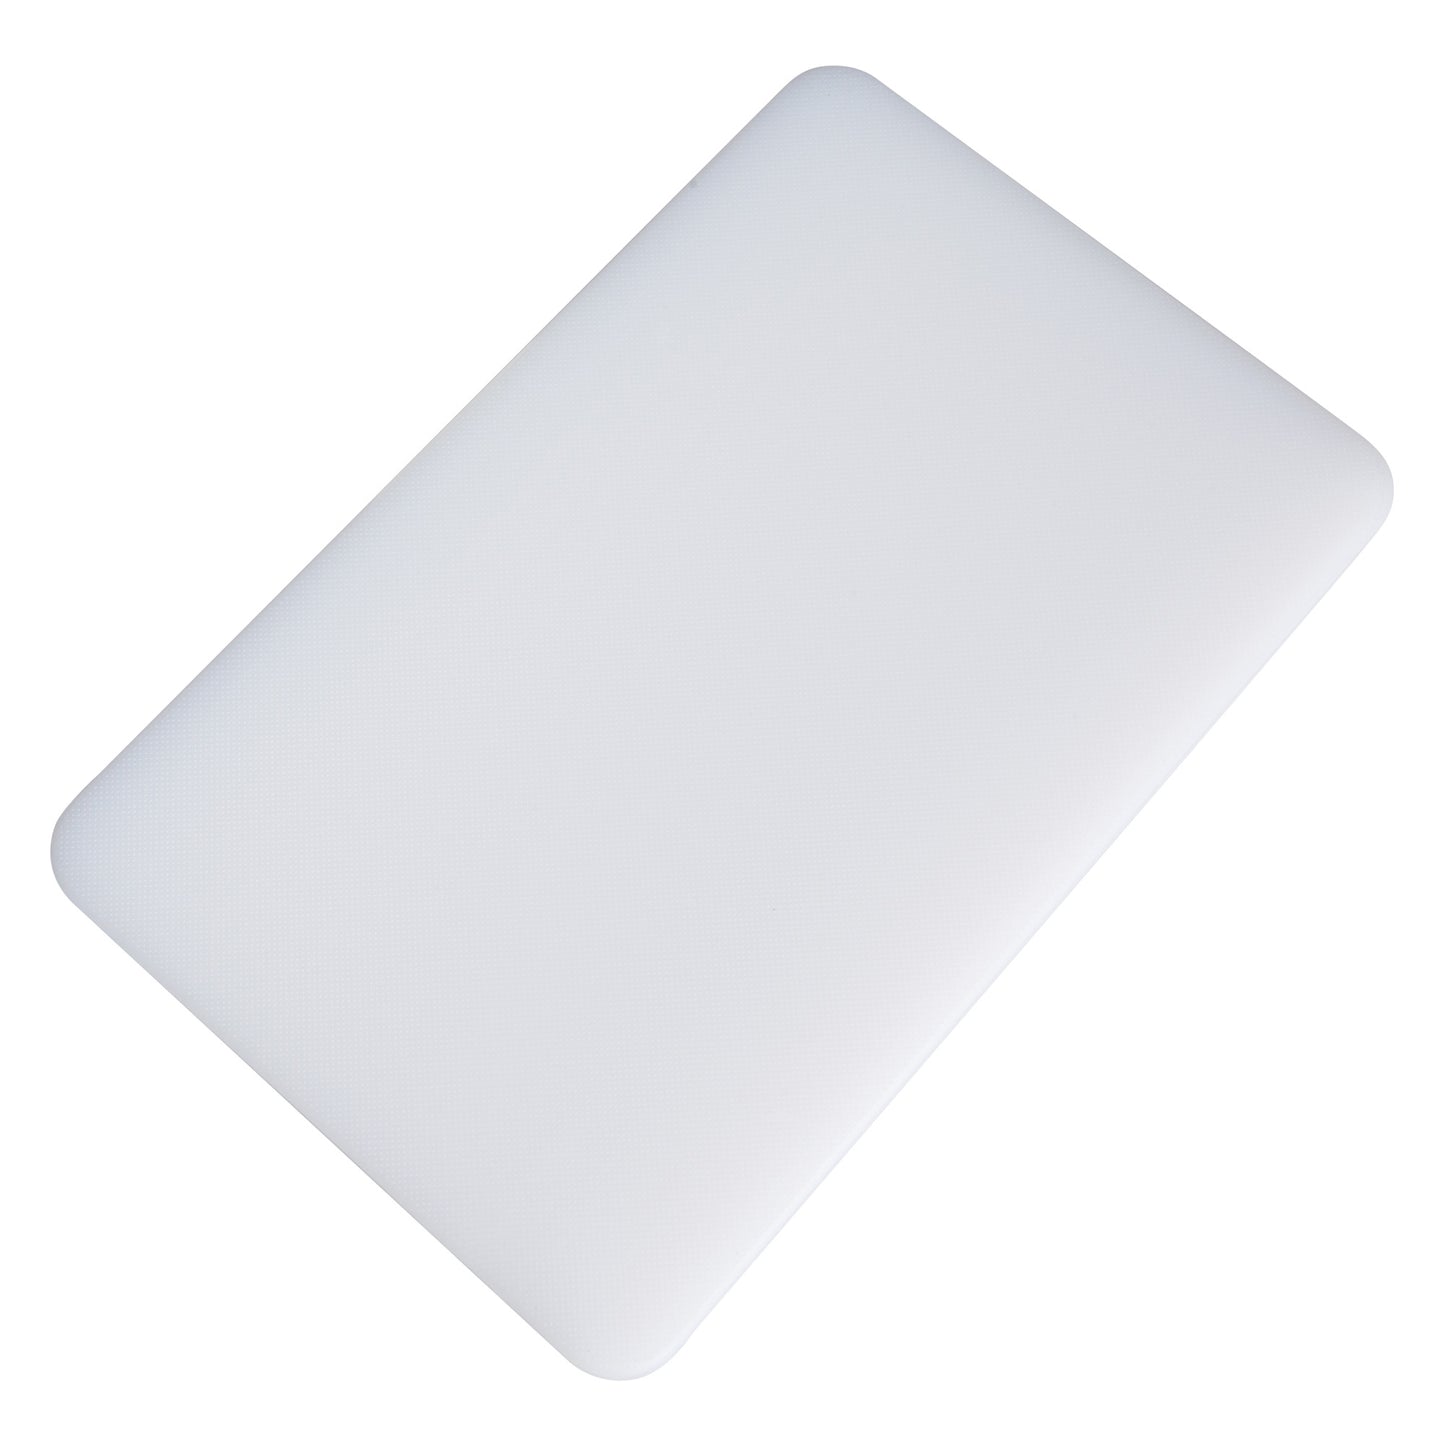 CBWT-610 - White Rectangular Cutting Board - 6" x 10" x 1/2"